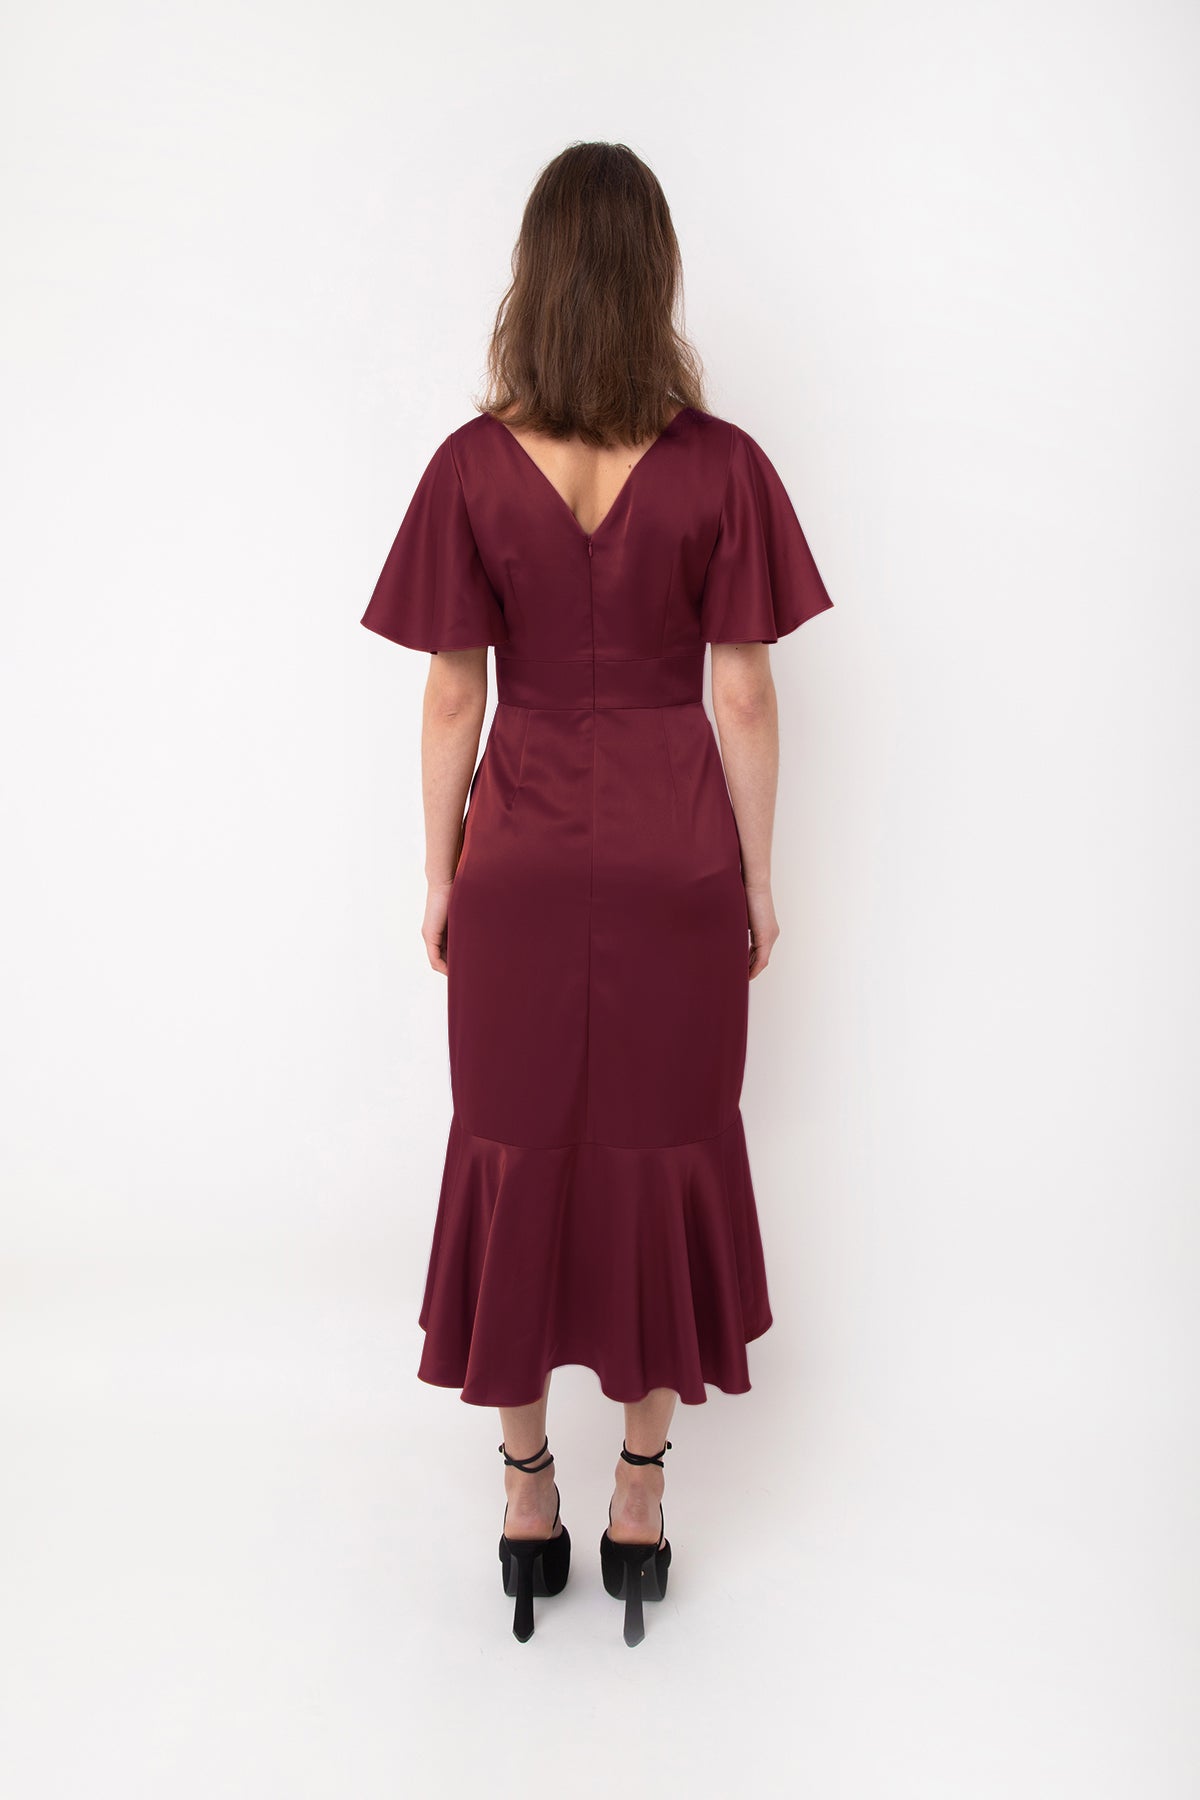 Eden Burgundy Satin Midi Tea Dress - An Elegant Style for Every Occasion | AmyLynn